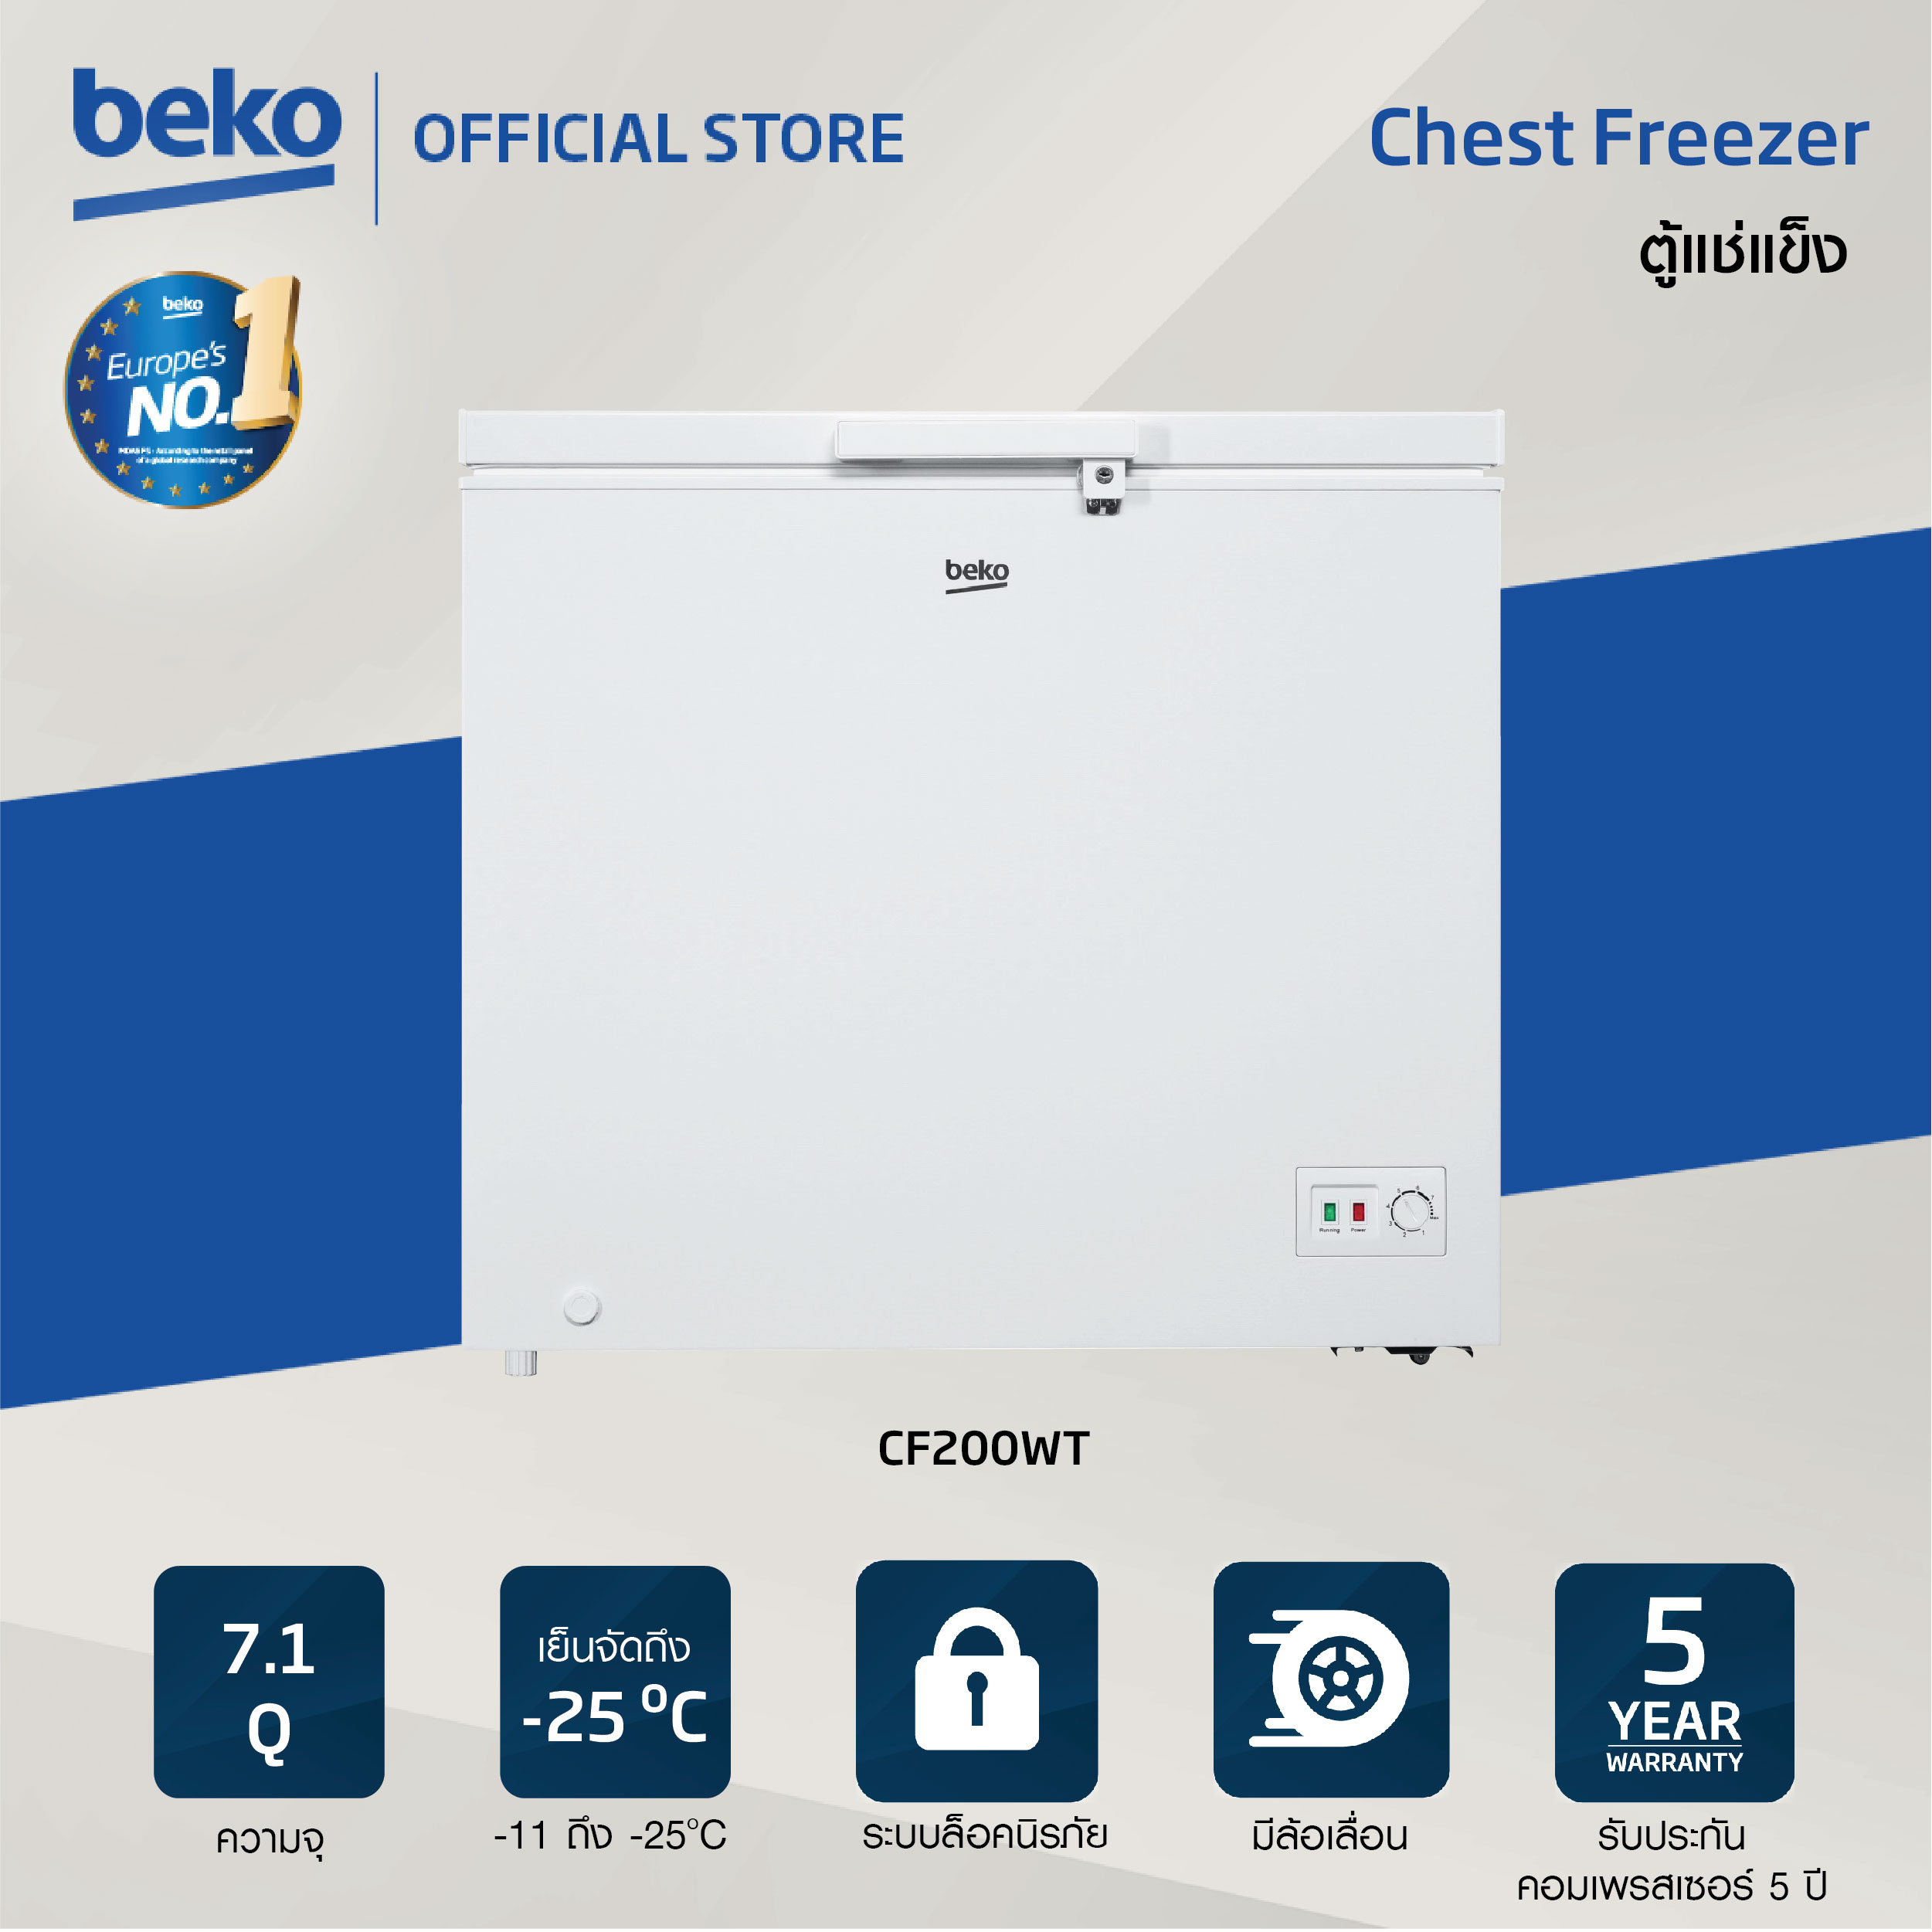 Beko ตู้แช่แข็ง Chest Freezer รุ่นCF200WT ความจุ7.1 คิว